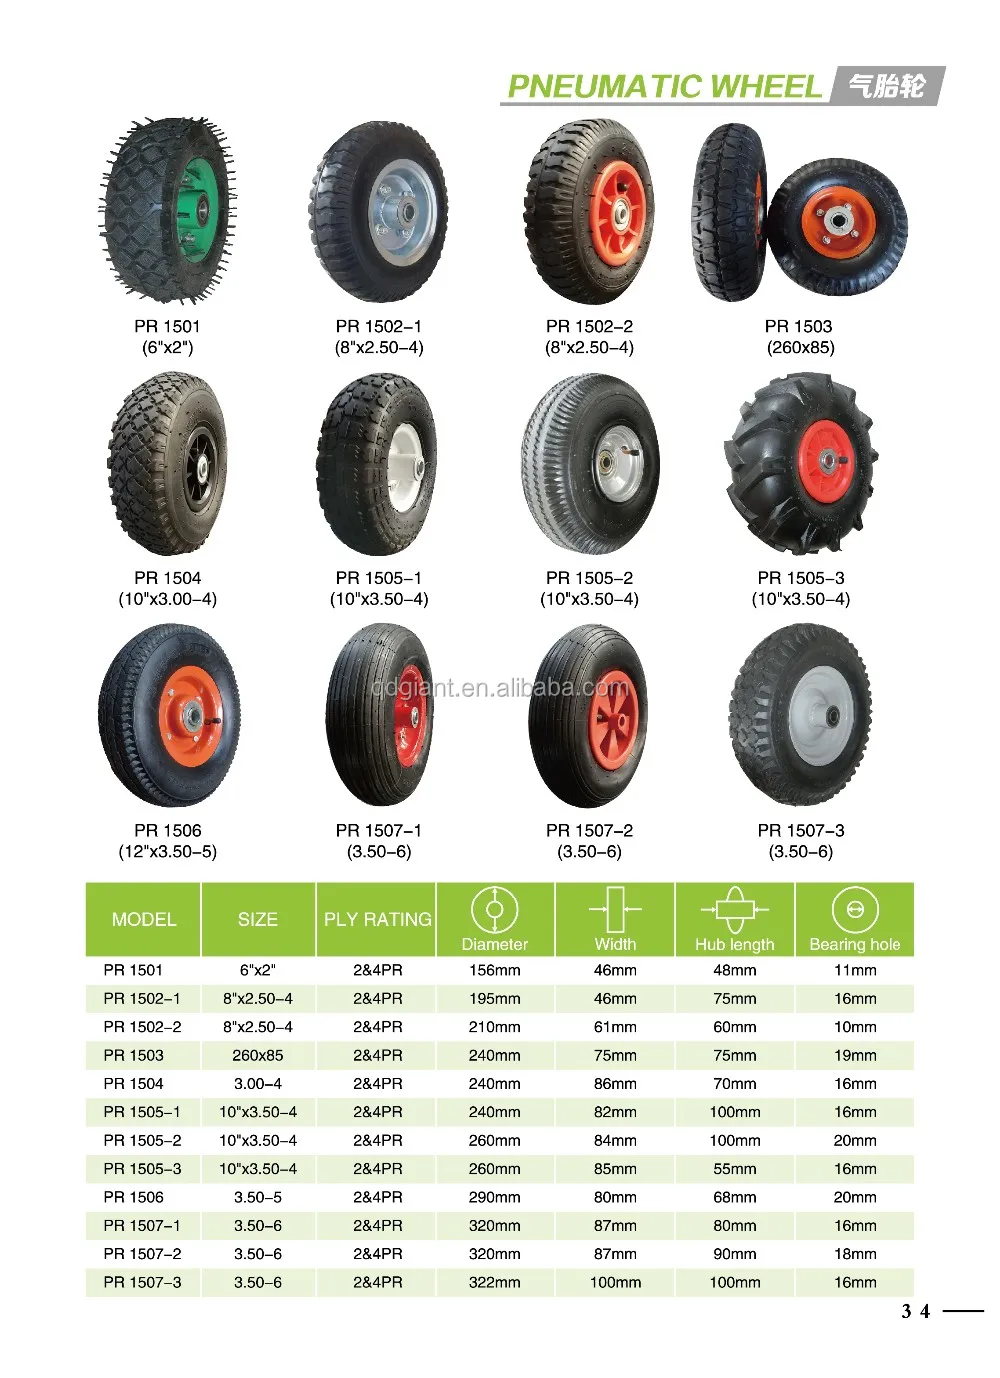 PR1514-12 pneumatic wheels for wheelbarrow